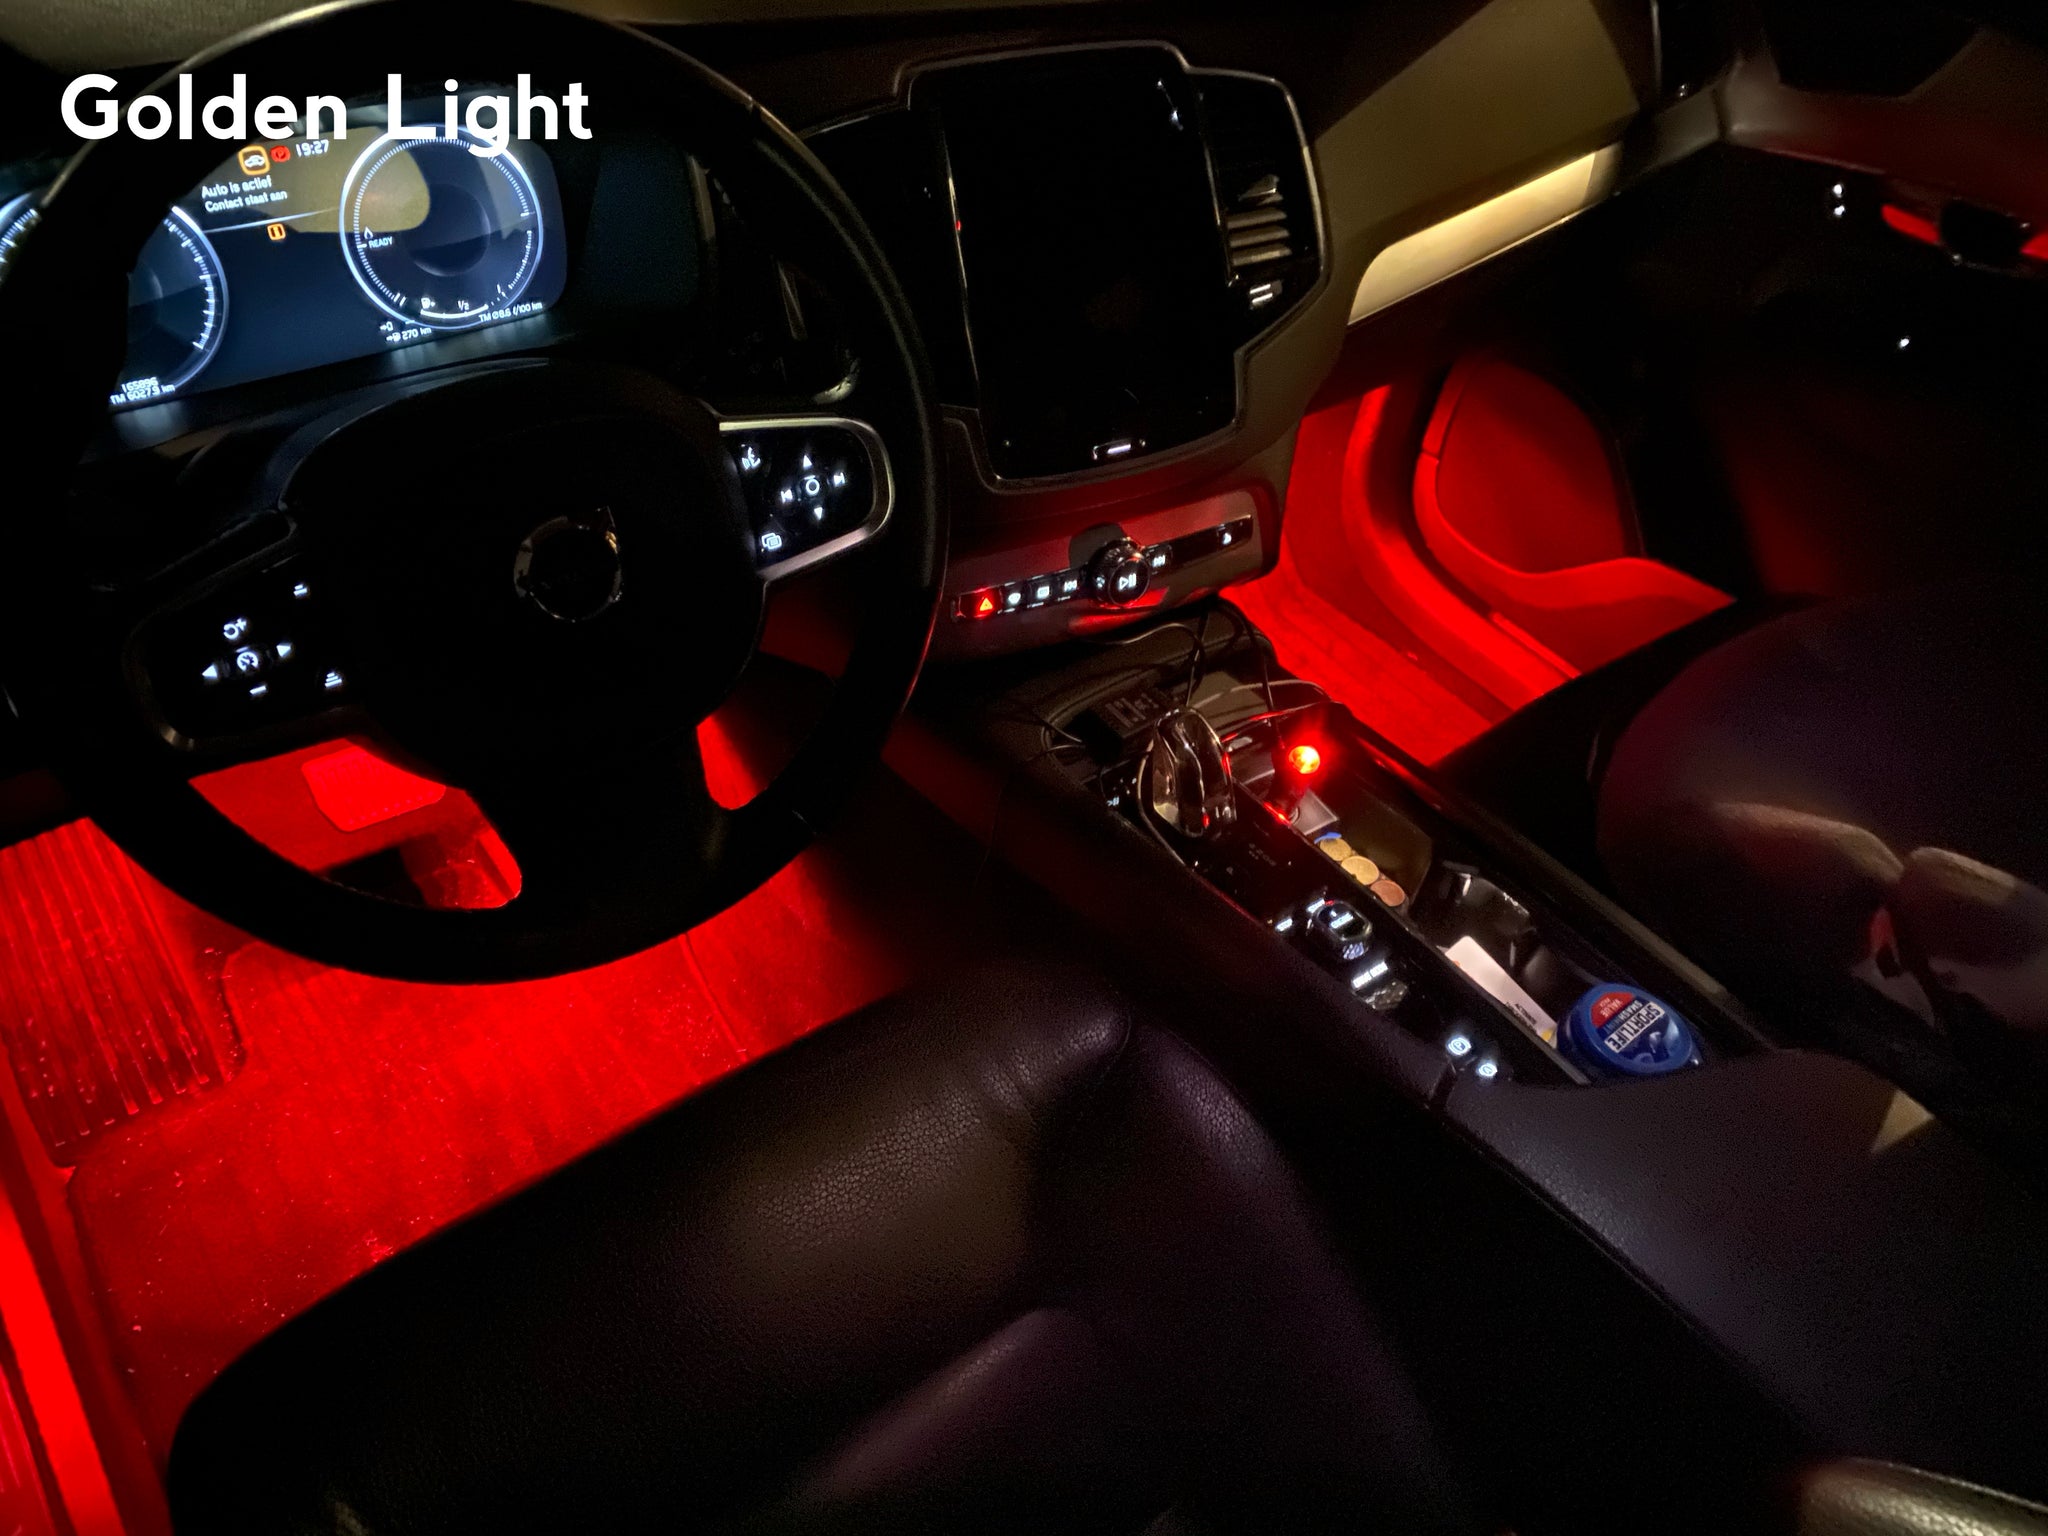 LED Auto Interieur Verlichting 12V RGB – Golden Light Shop